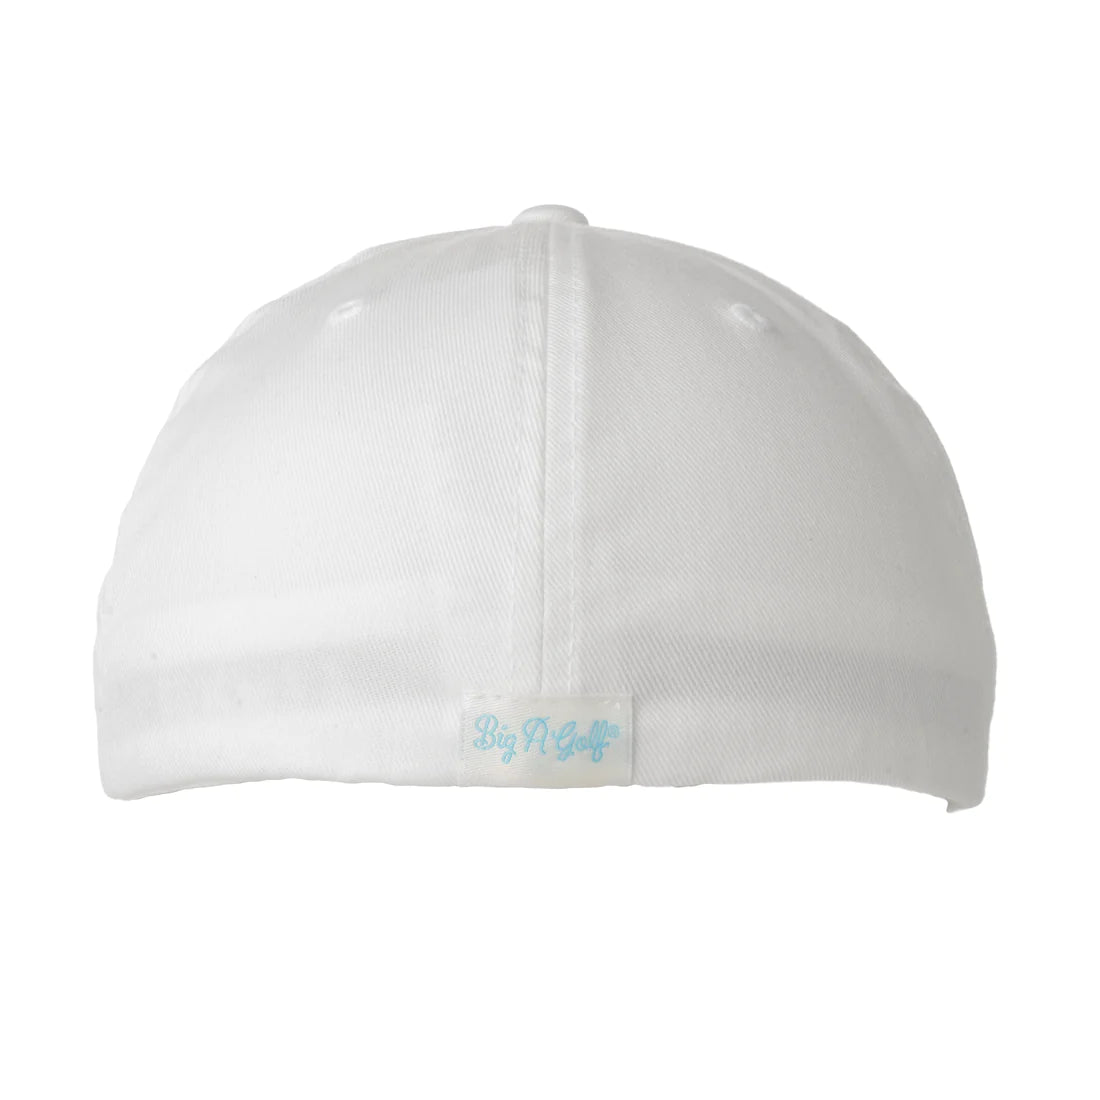 GOLF FLEXFIT CAP - ALBATROSS - WHITE